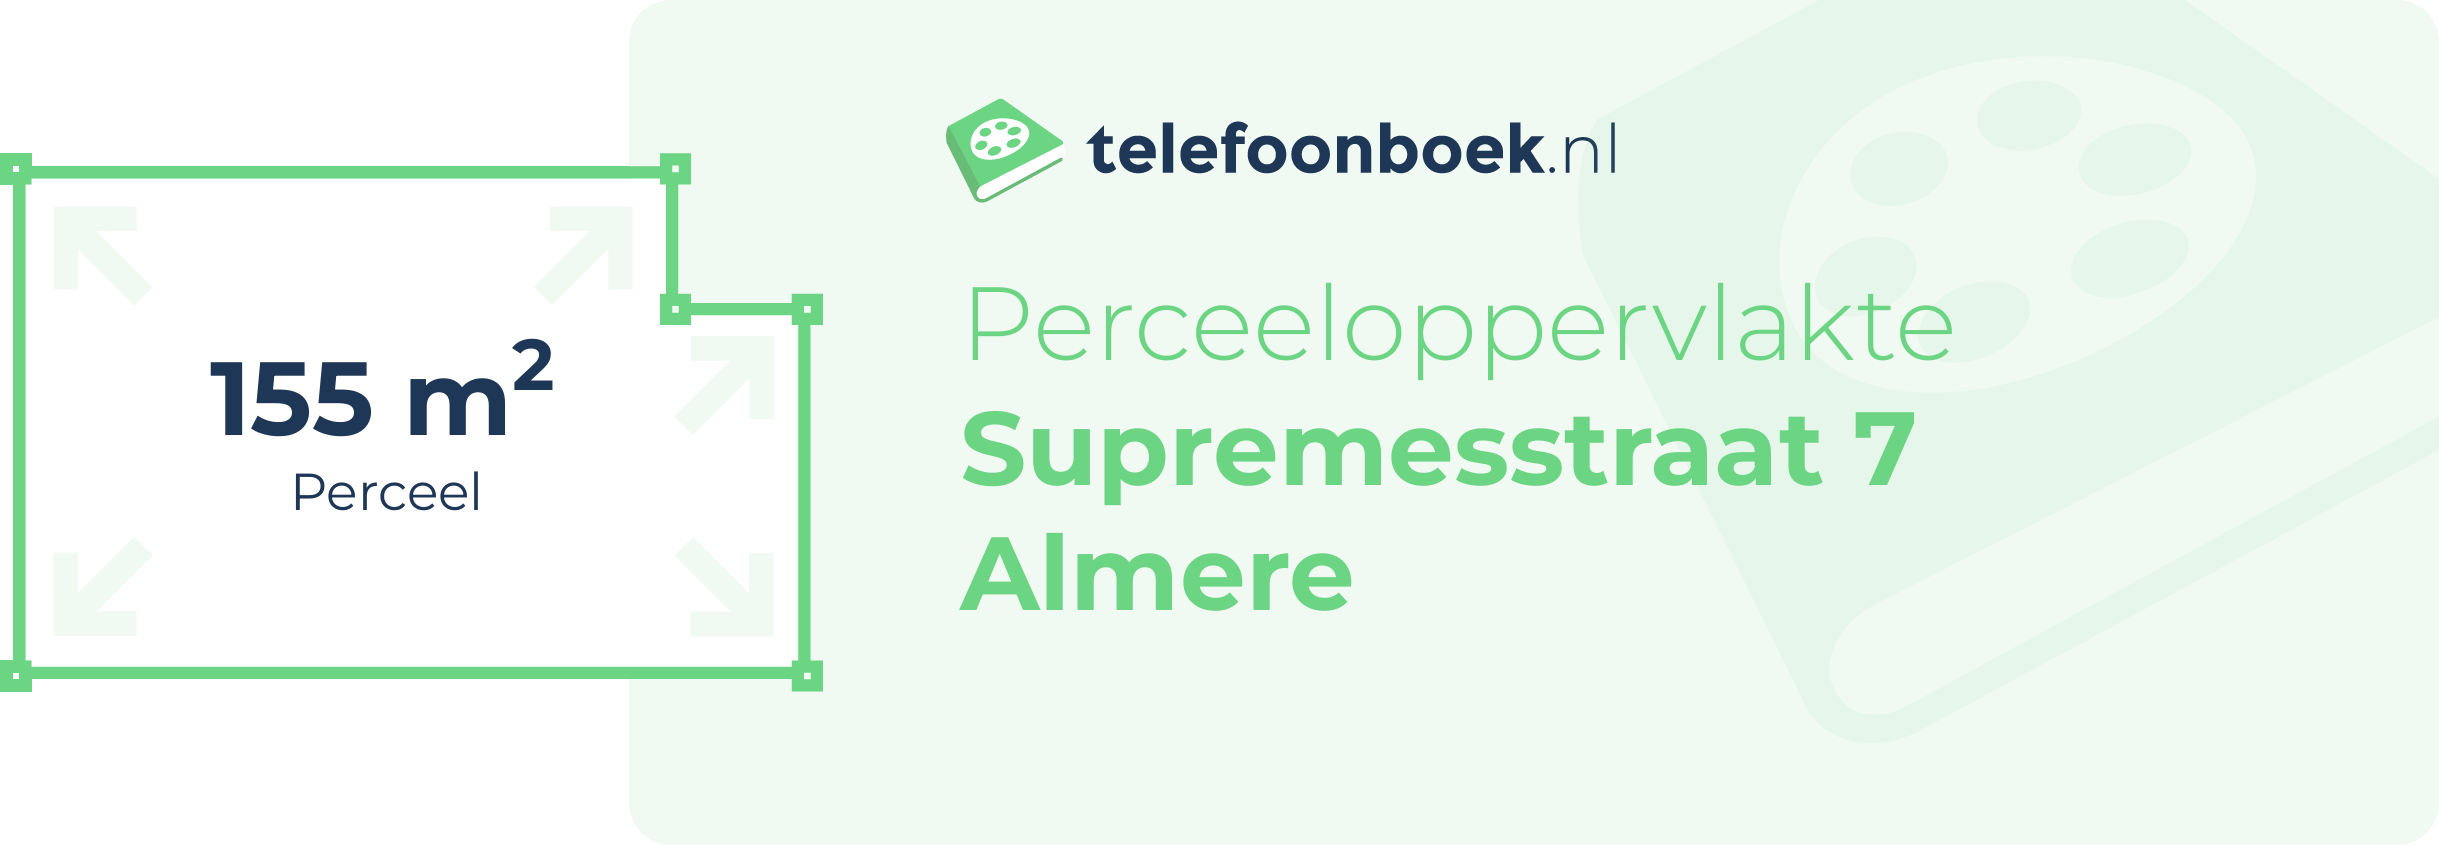 Perceeloppervlakte Supremesstraat 7 Almere